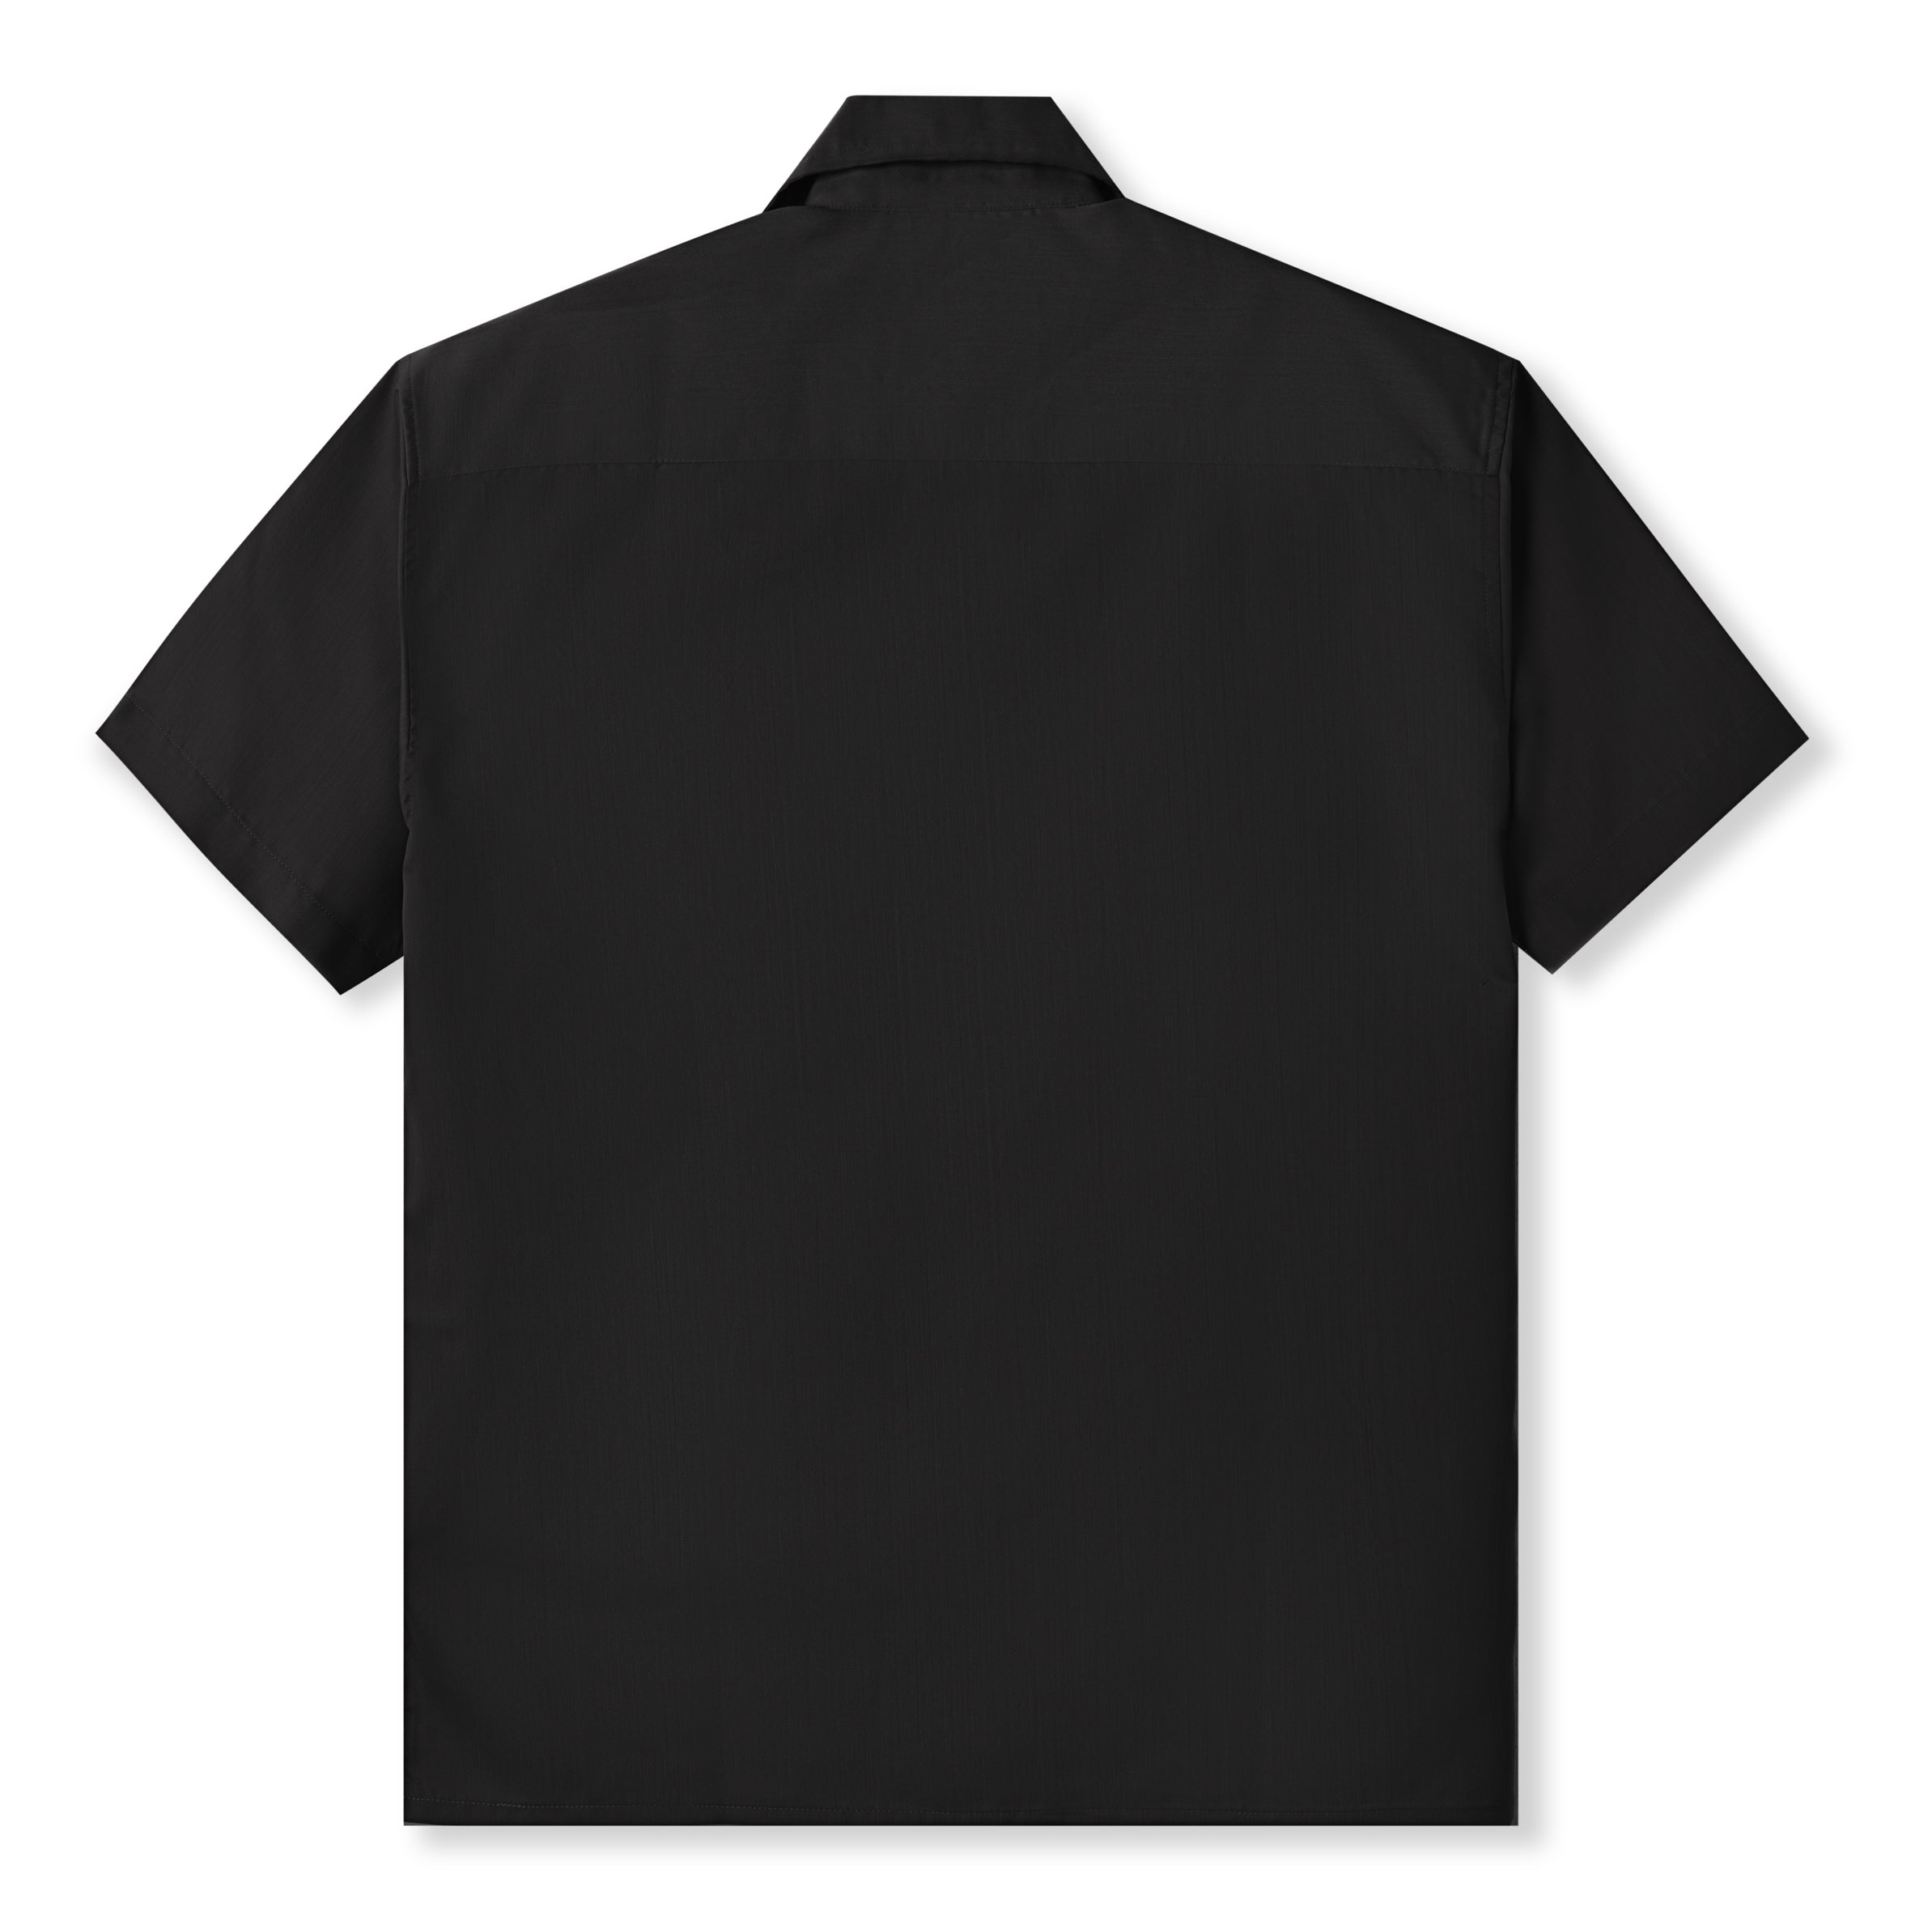 The Prep Shirt - Black